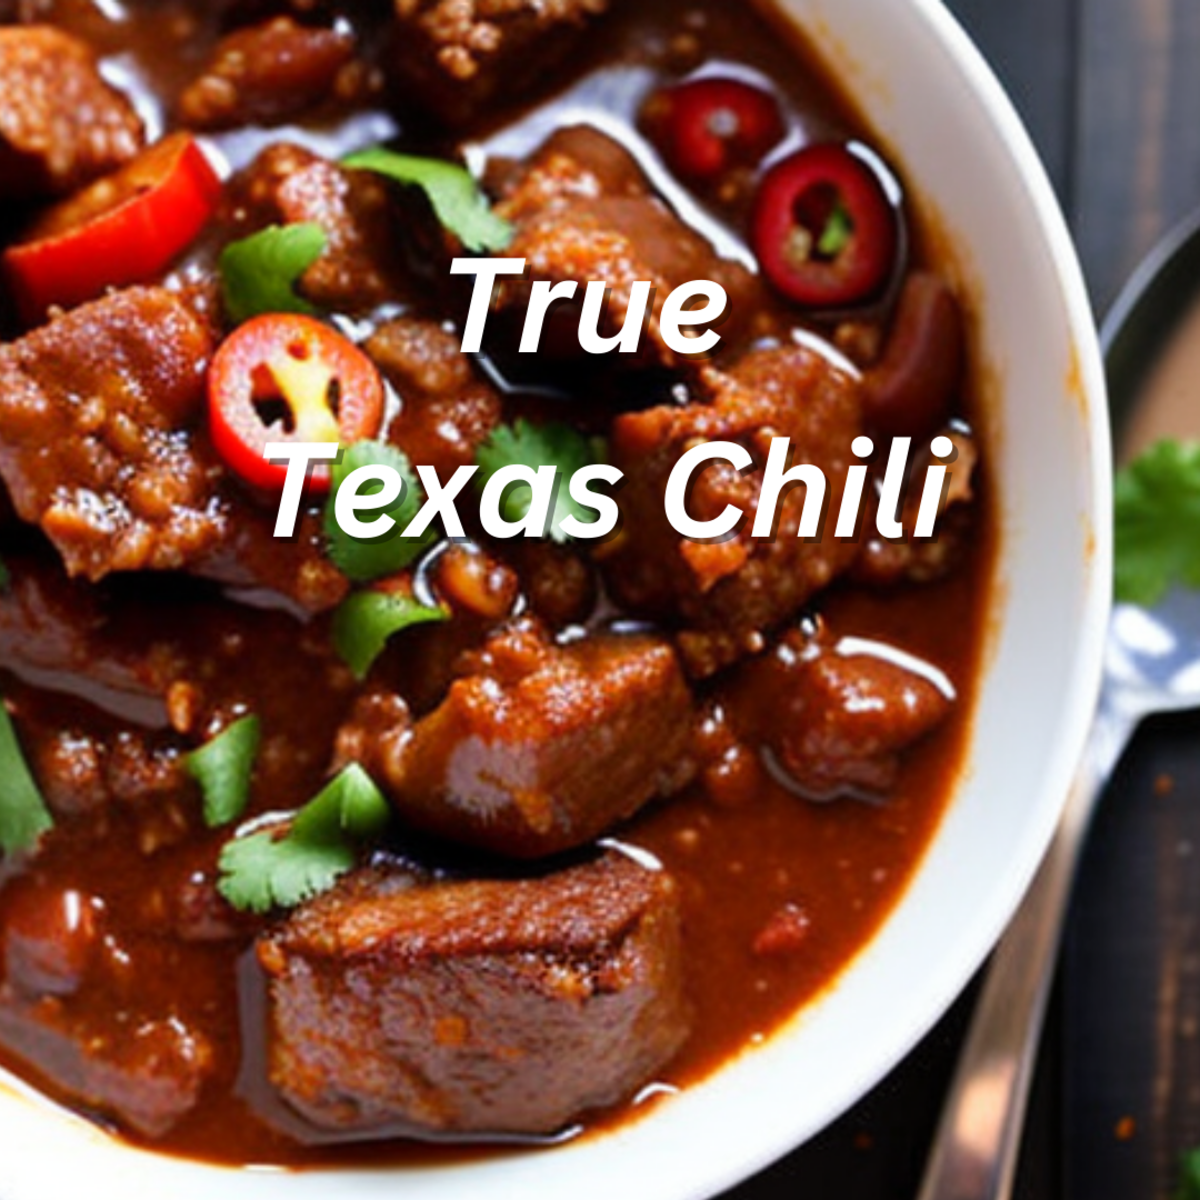 True Texas Chili